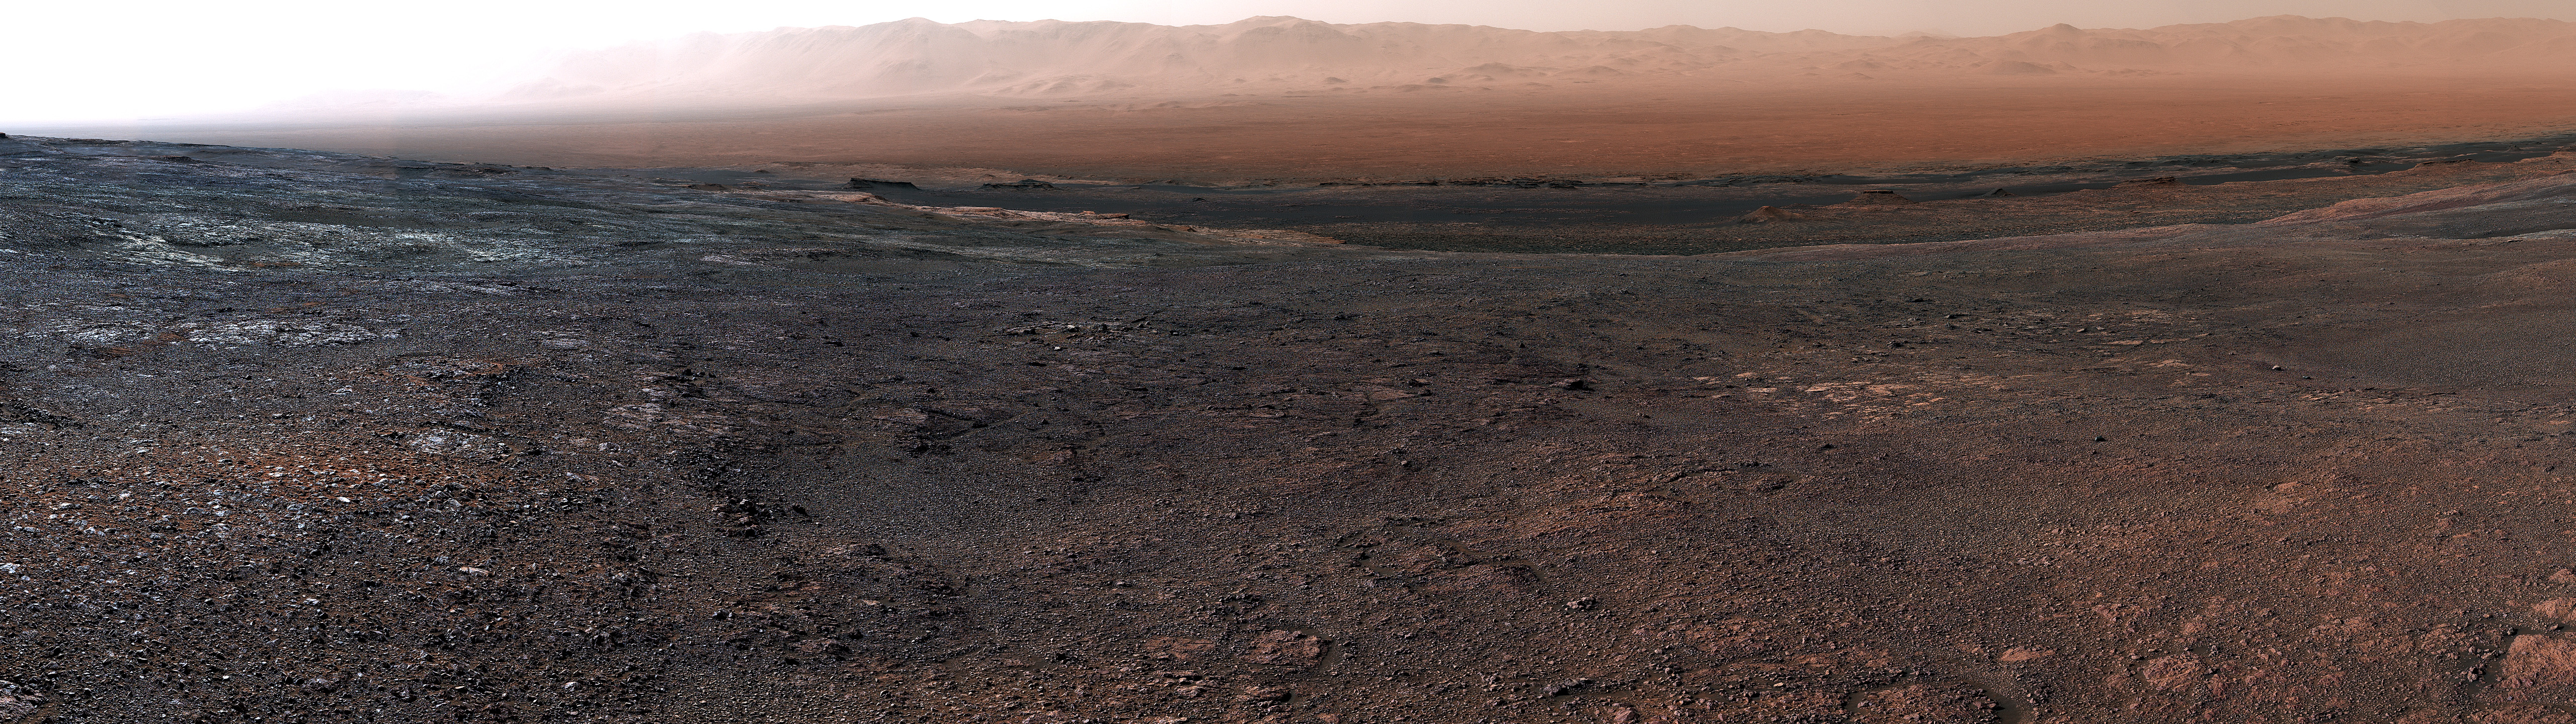 General 5120x1440 ultrawide Mars NASA landscape